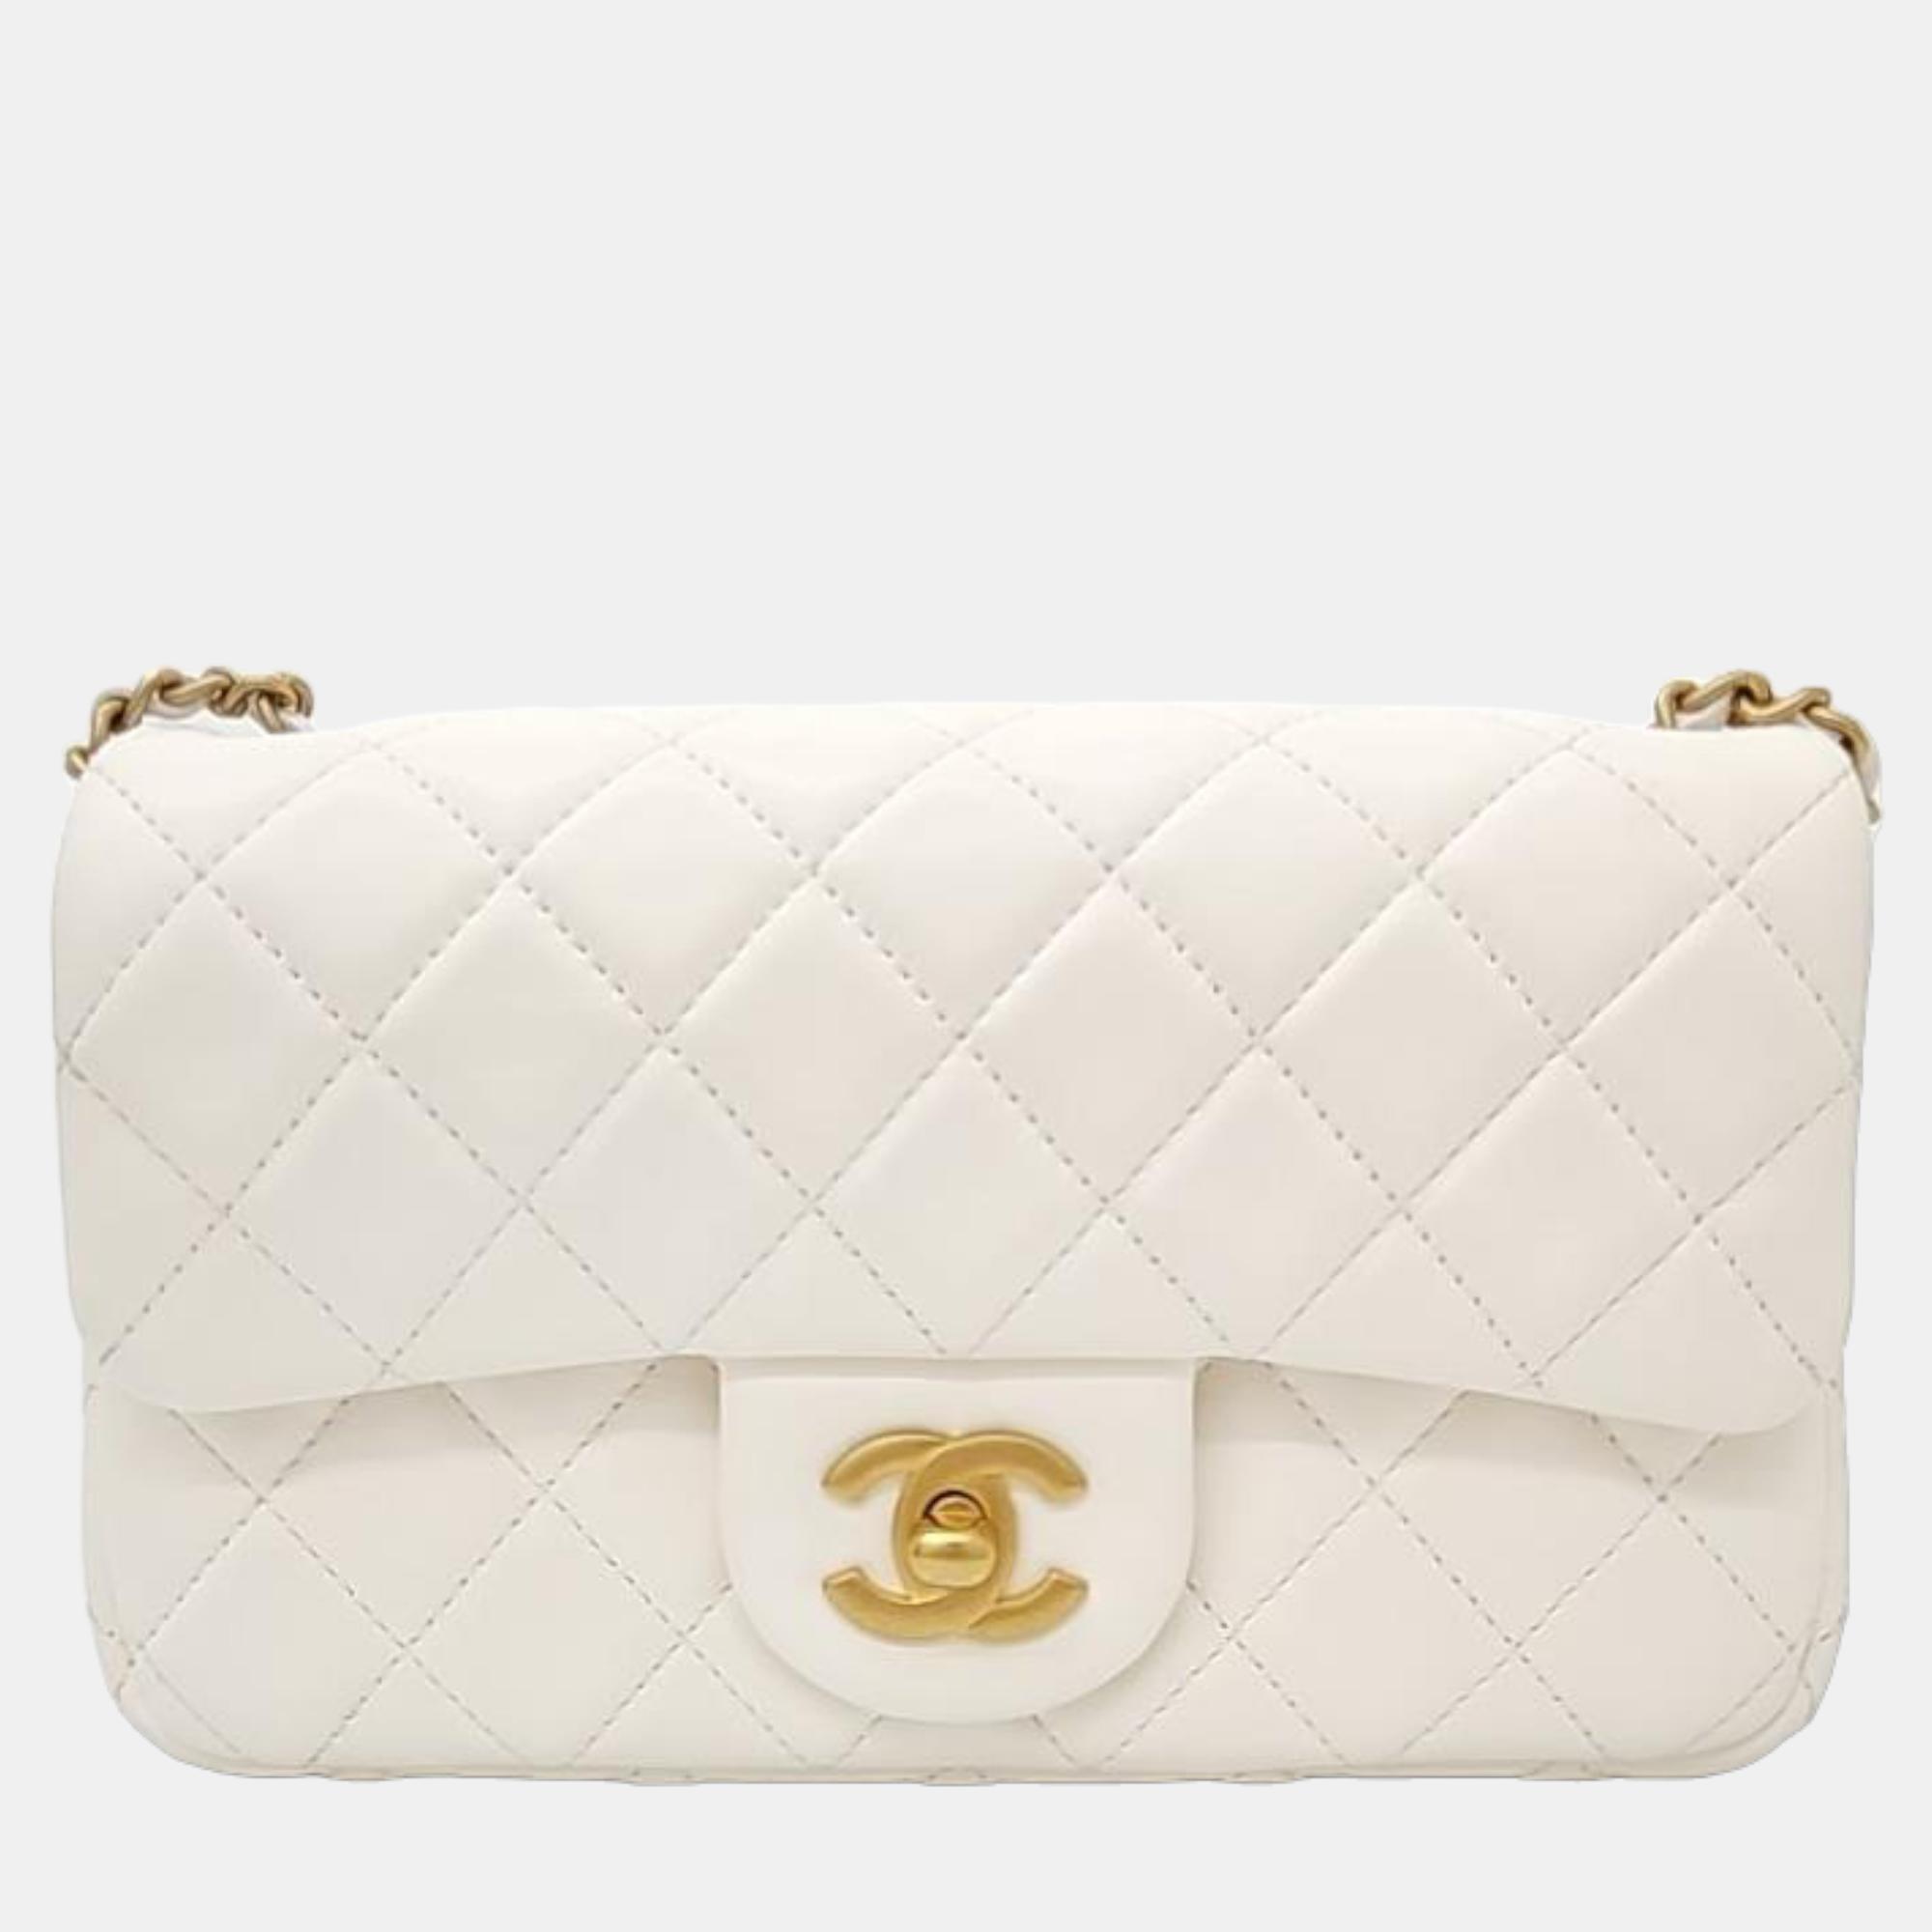 Chanel white leather pearl crush rectangular mini flap bag